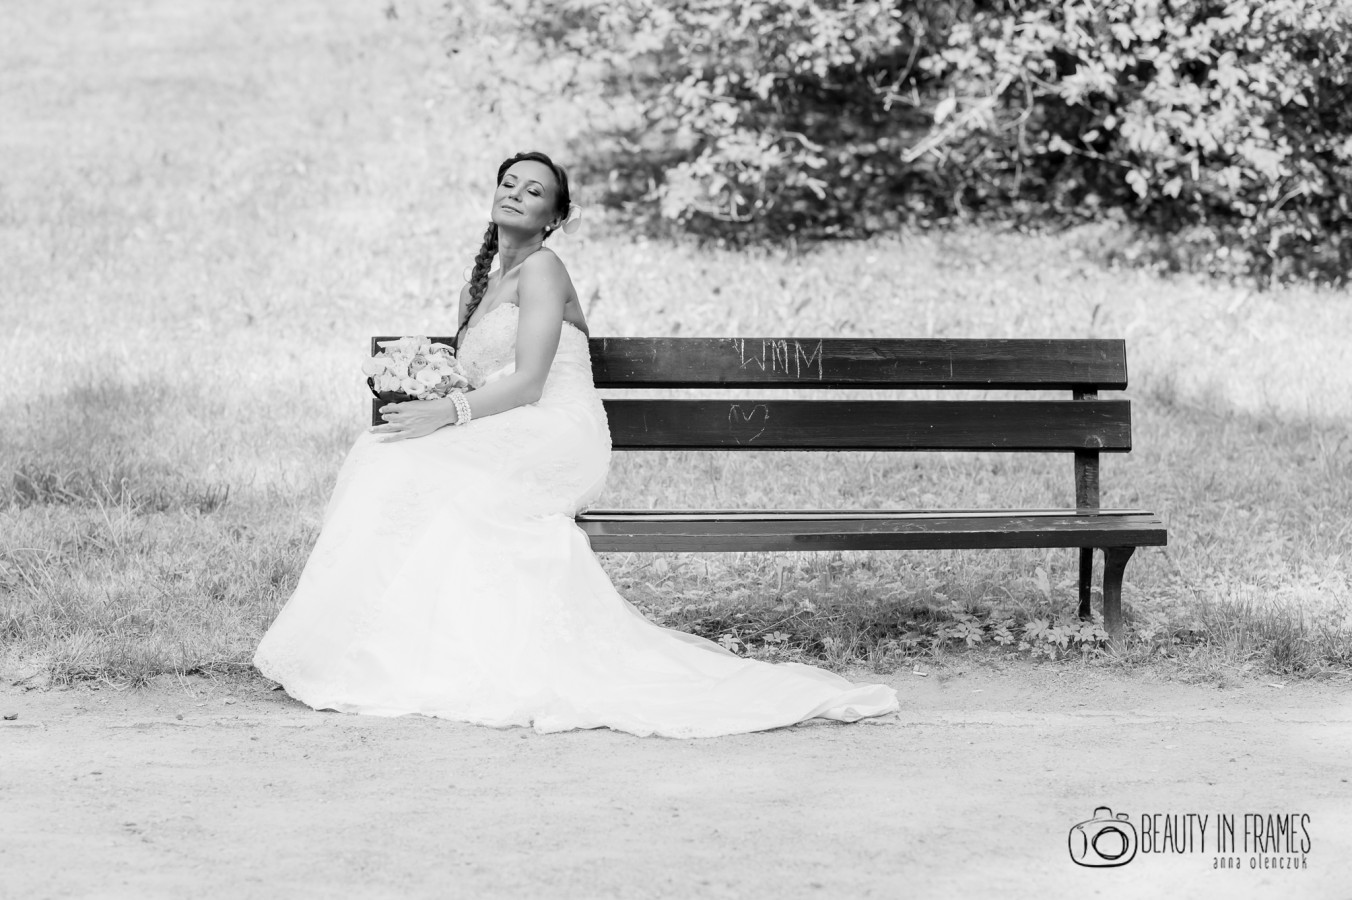 fotograf szczecin beauty-in-frames portfolio zdjecia slubne inspiracje wesele plener slubny sesja slubna